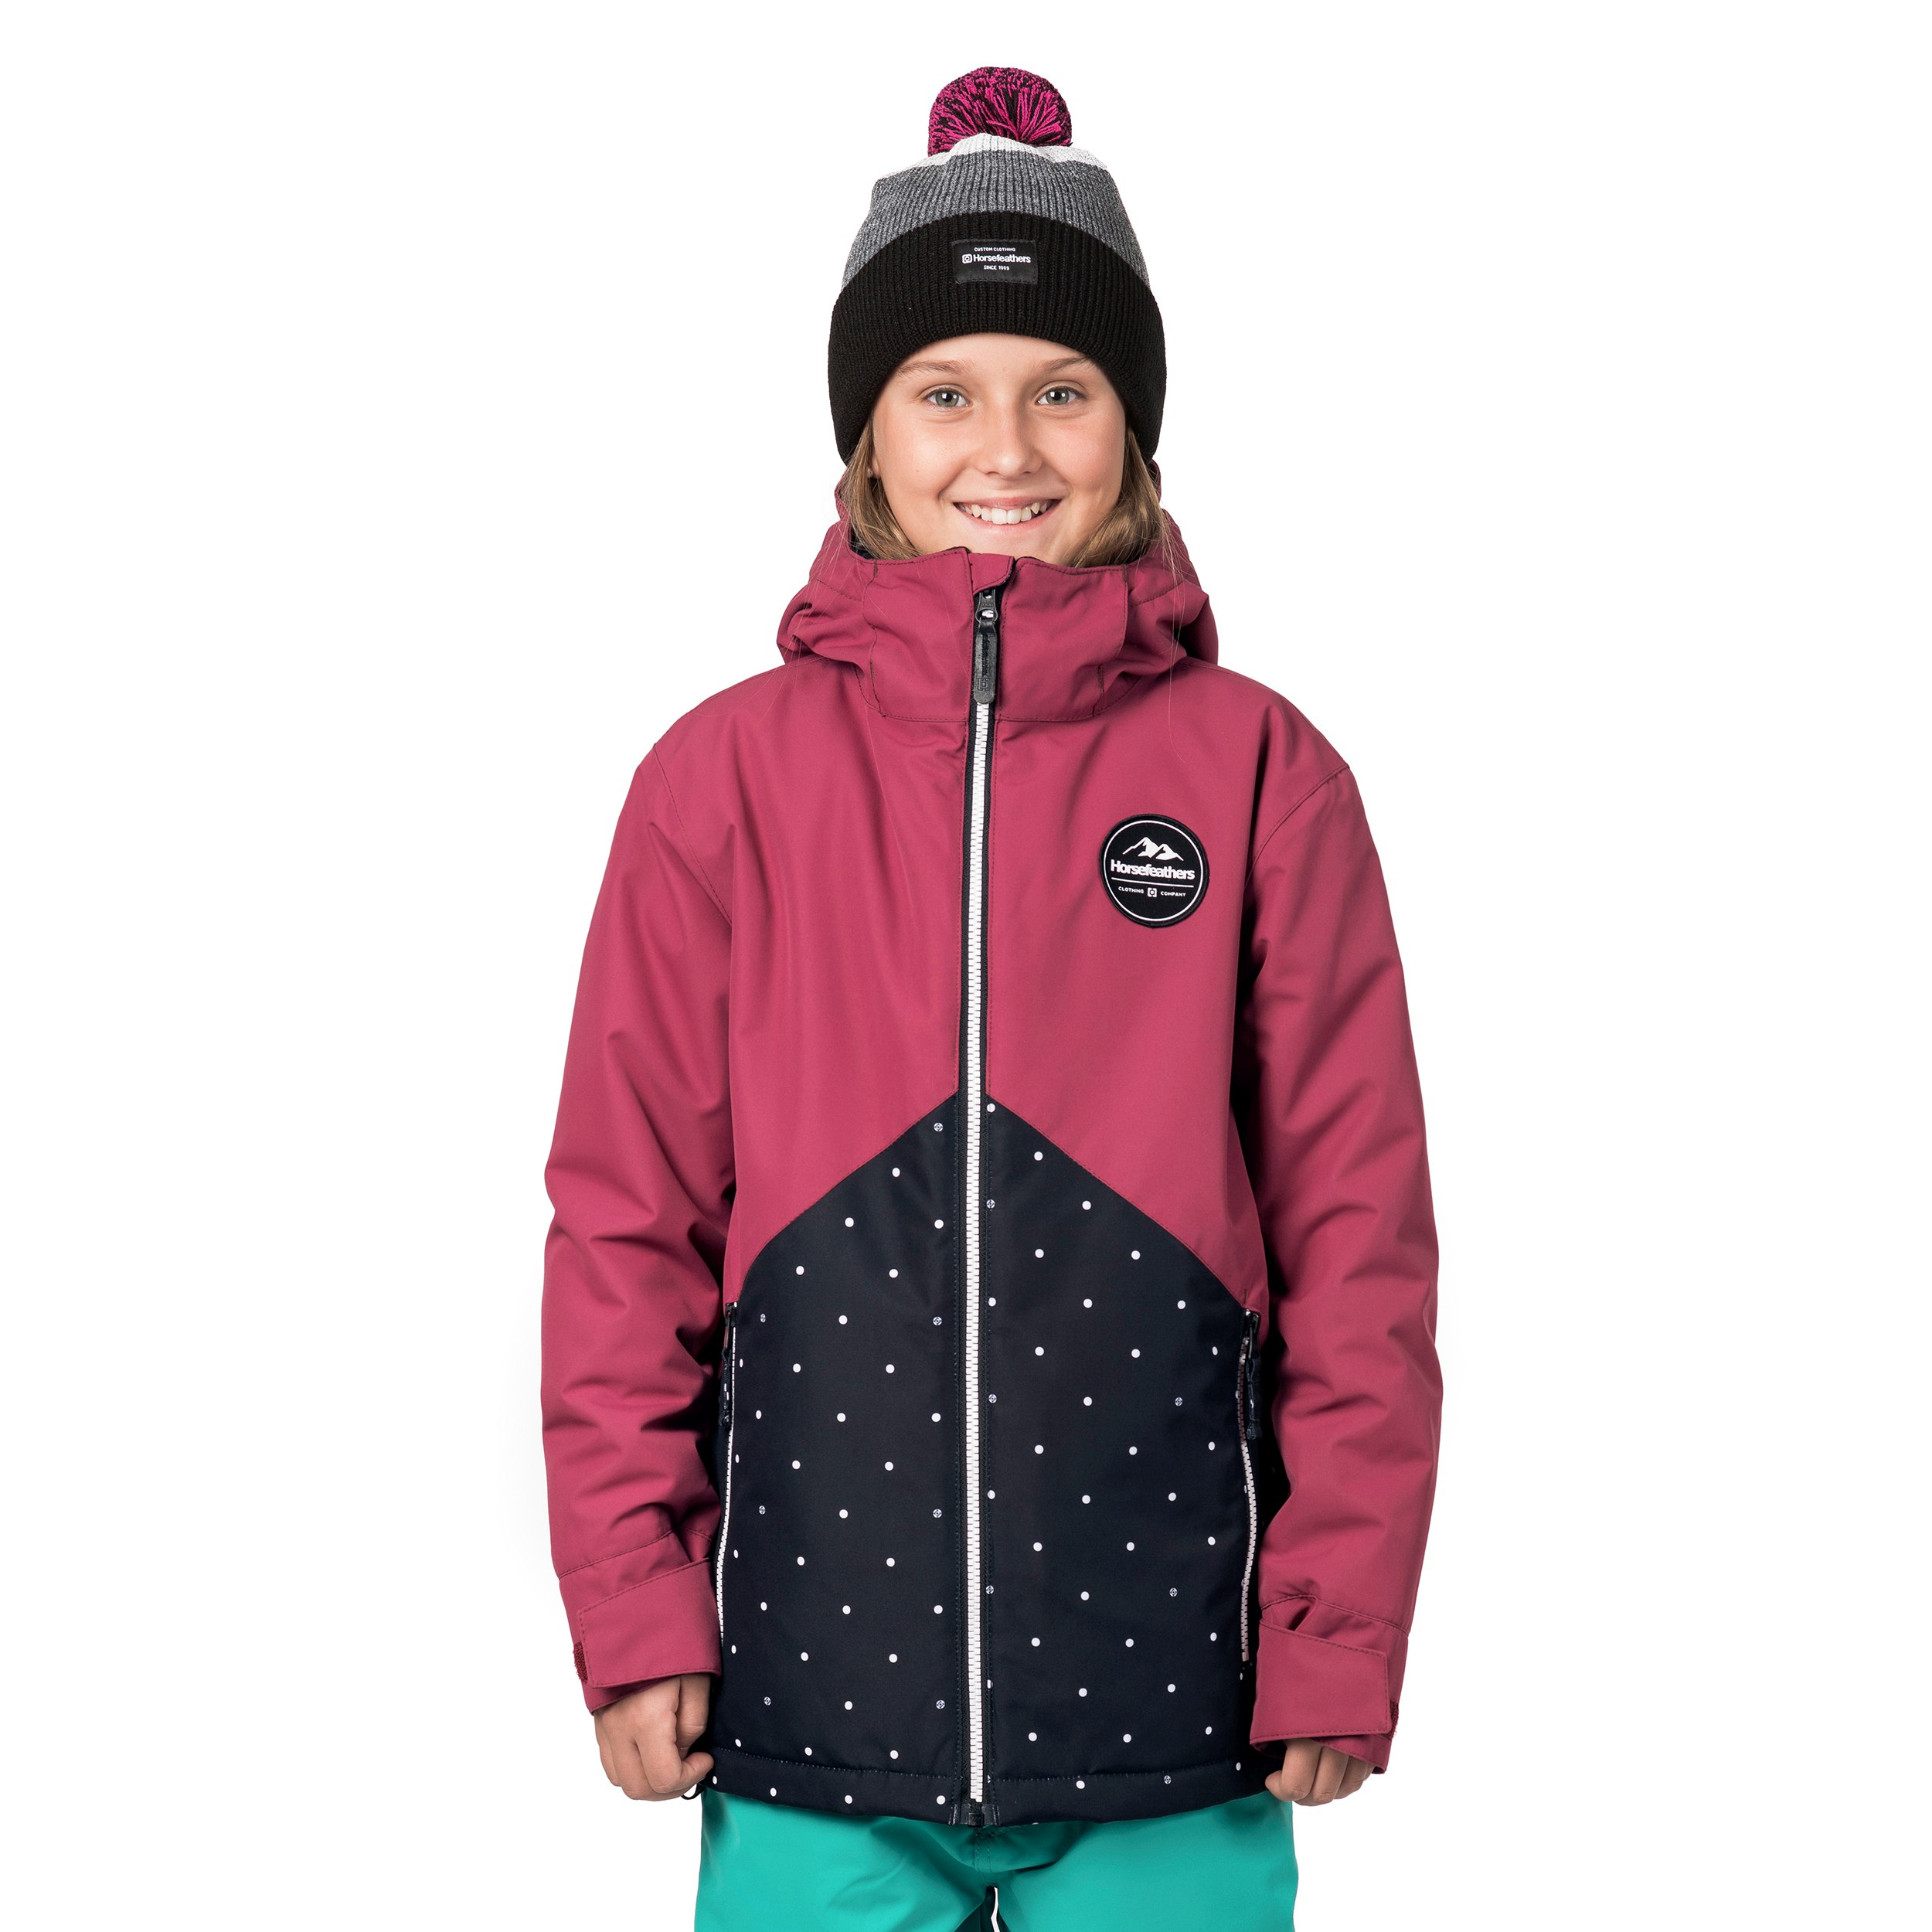 Girls’ winter ski/snowboard jacket